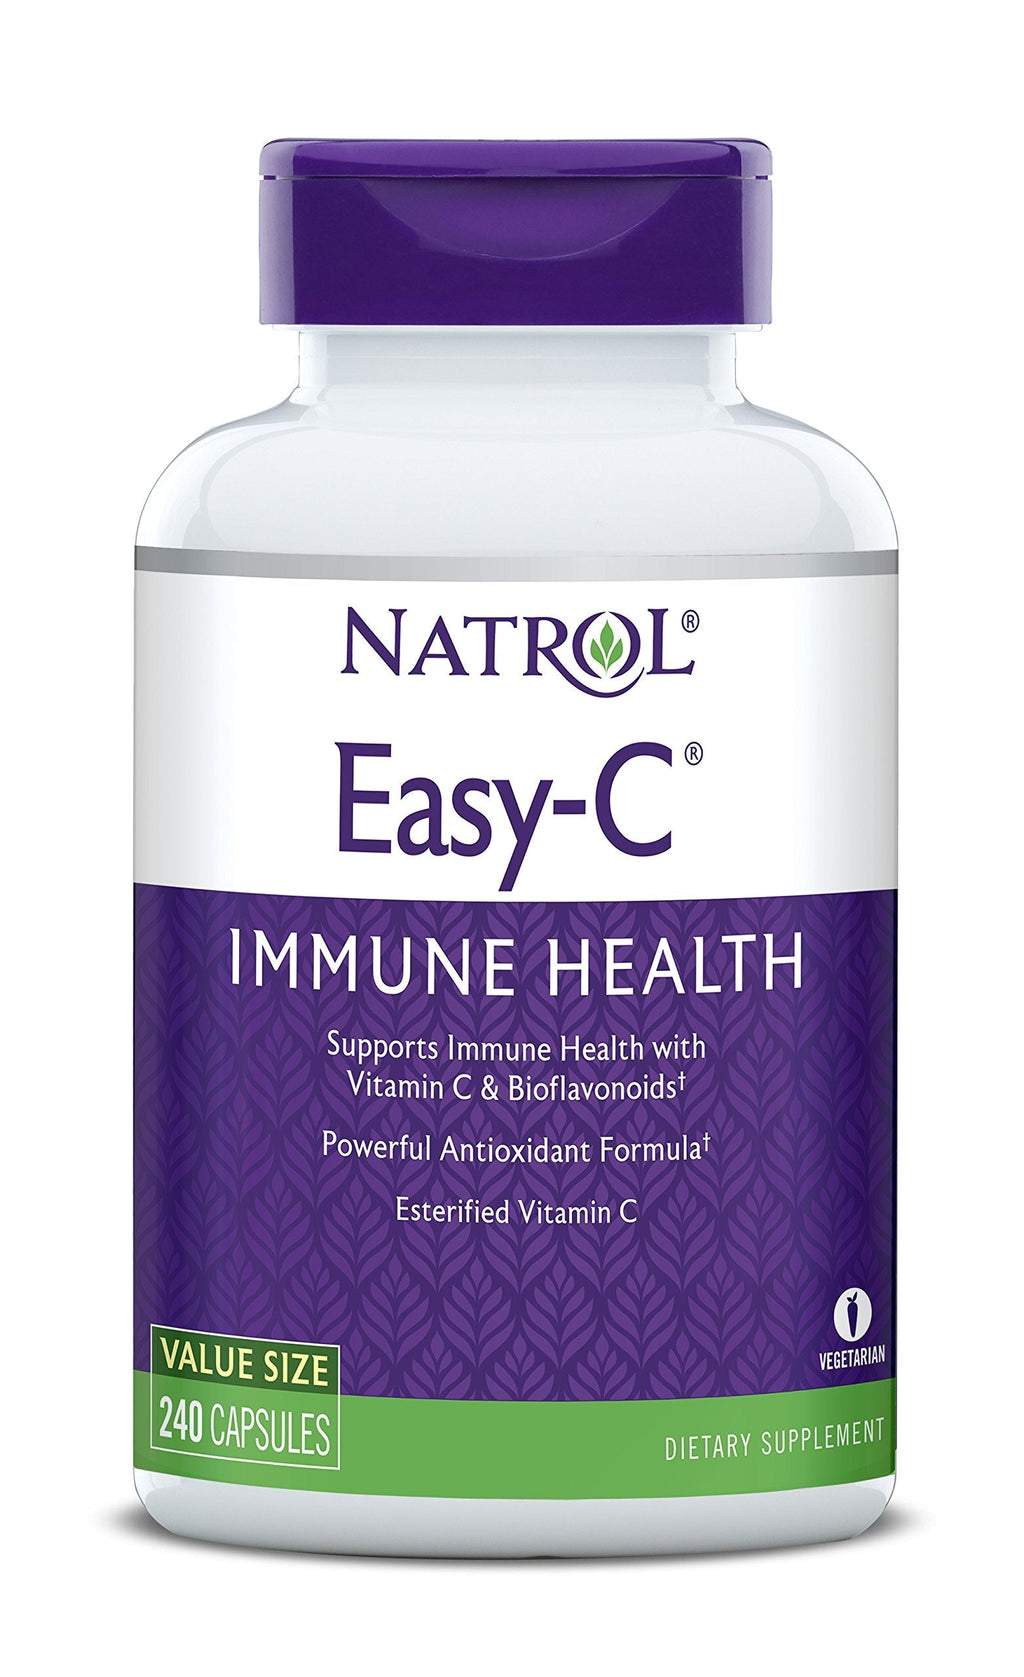 [Australia] - Natrol Easy-C Immune Health, Supports Immune Health with Vitamin C and Bioflavonoids, Bios Vegi Capsules, 500 mg, 240 Count 240 Count (Pack of 1) Capsule 